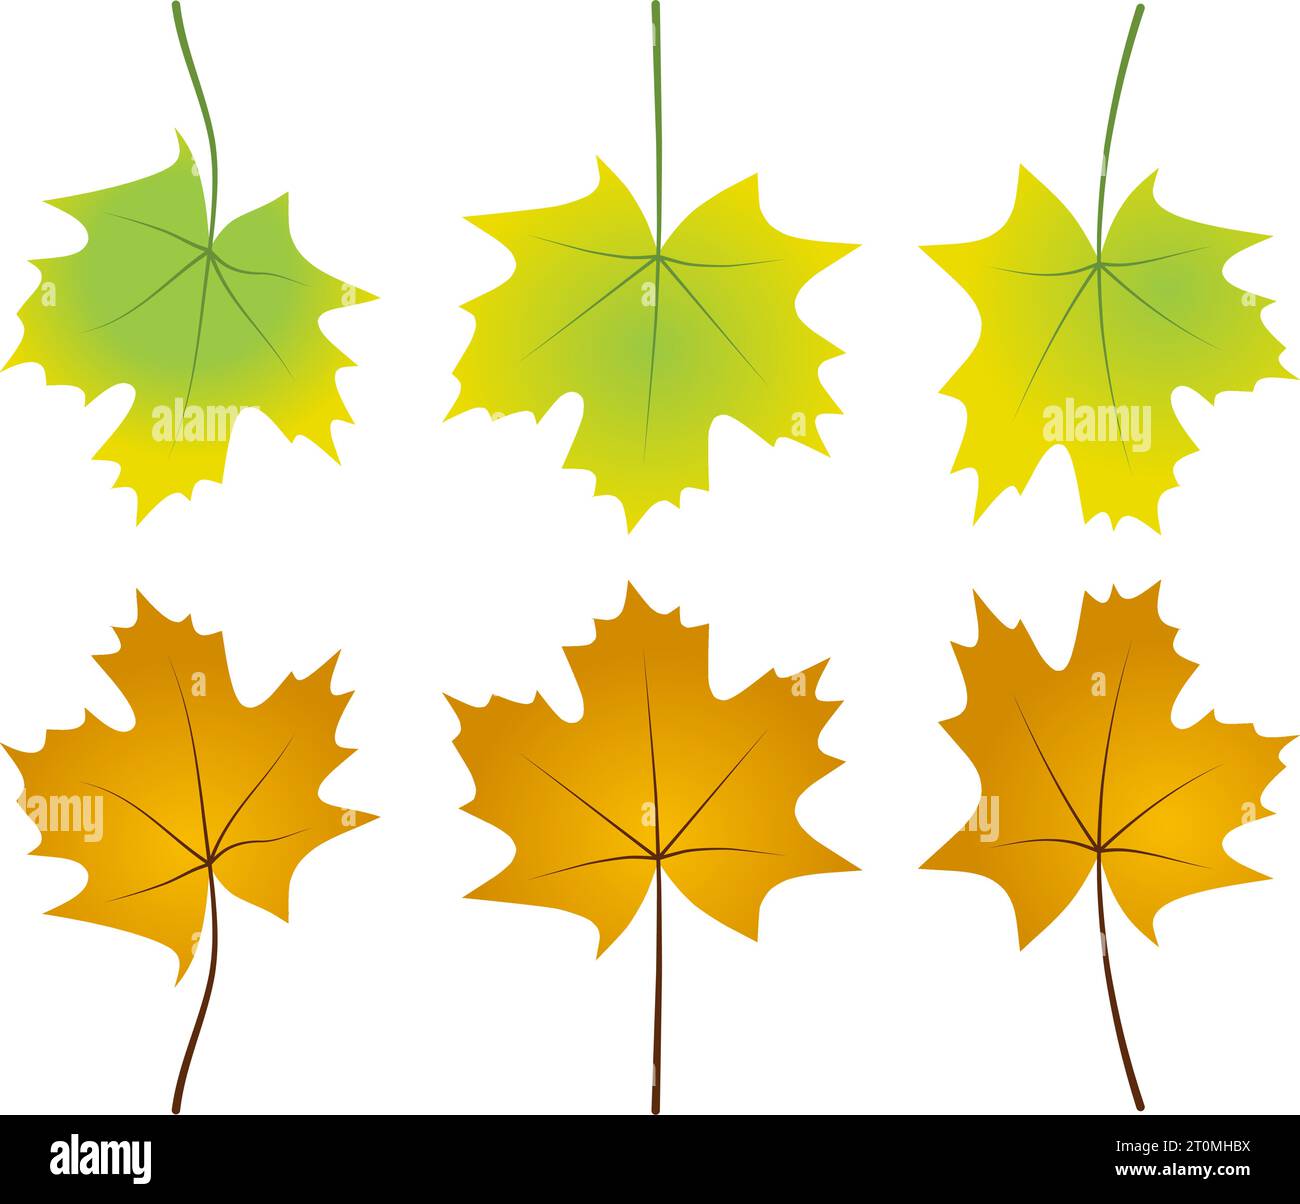 Grafik illustriert Herbstahornblätter Laub gefallene Grafik illustrierte Farben Gold-Orange-Grün Stock Vektor